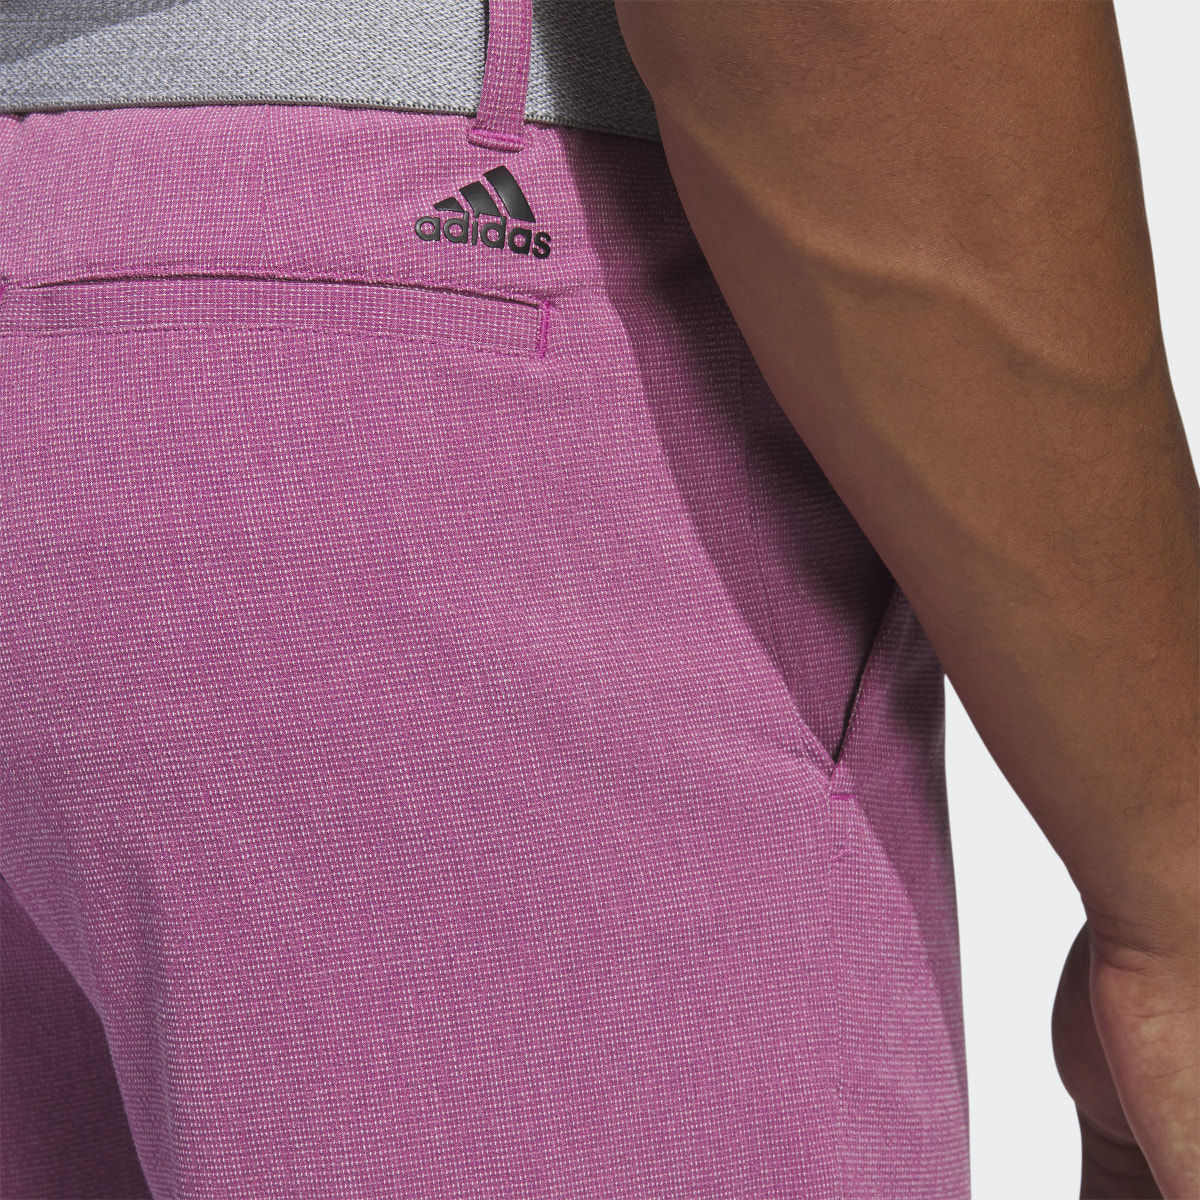 Adidas Crosshatch Shorts. 5